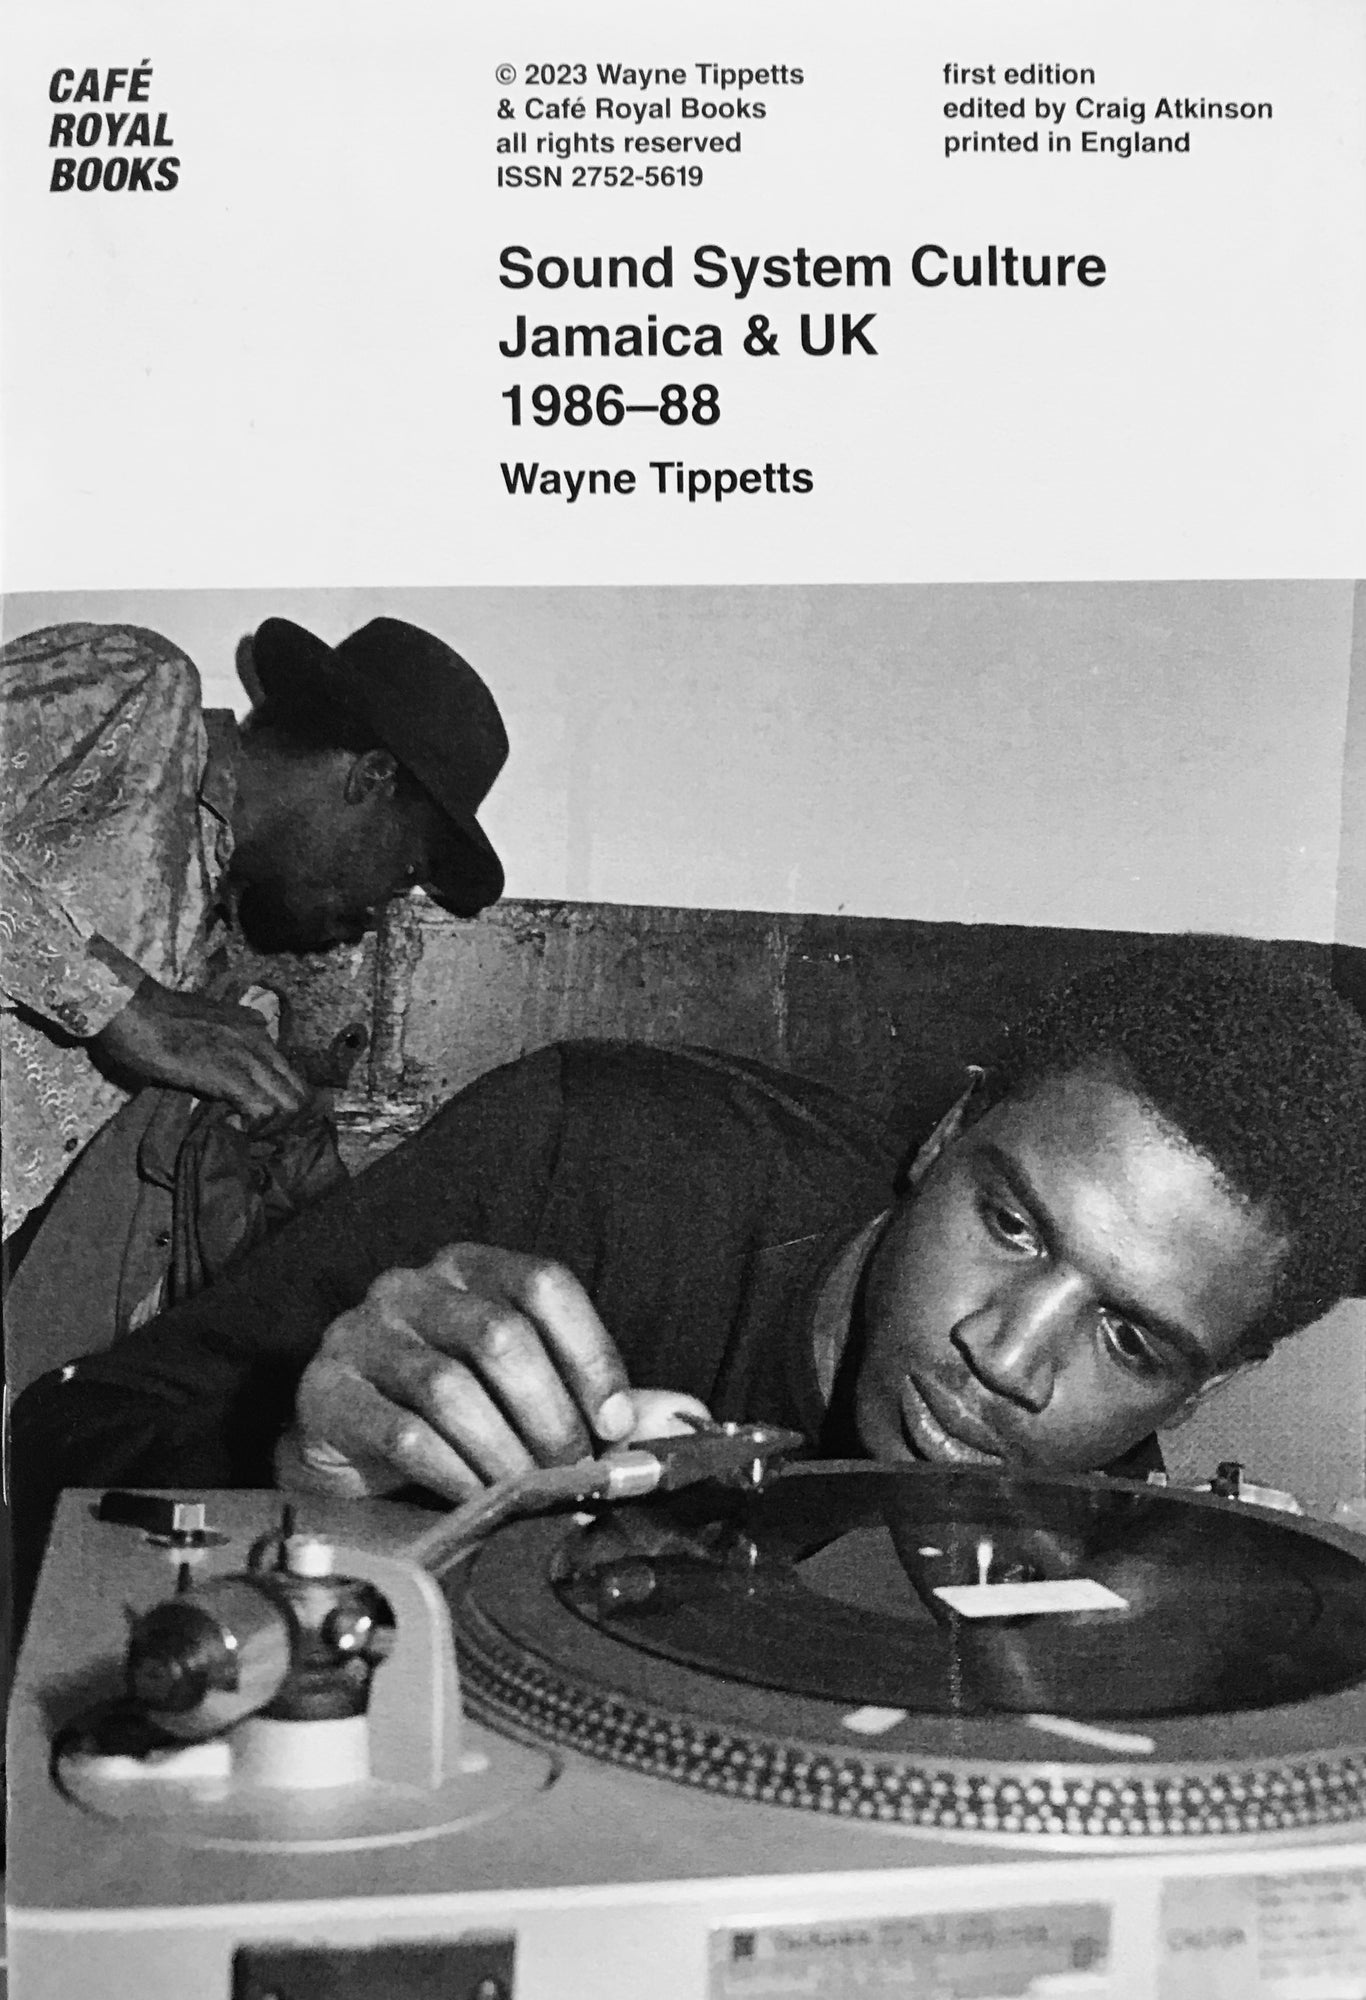 Sound System Culture Jamaica & UK 1986-88